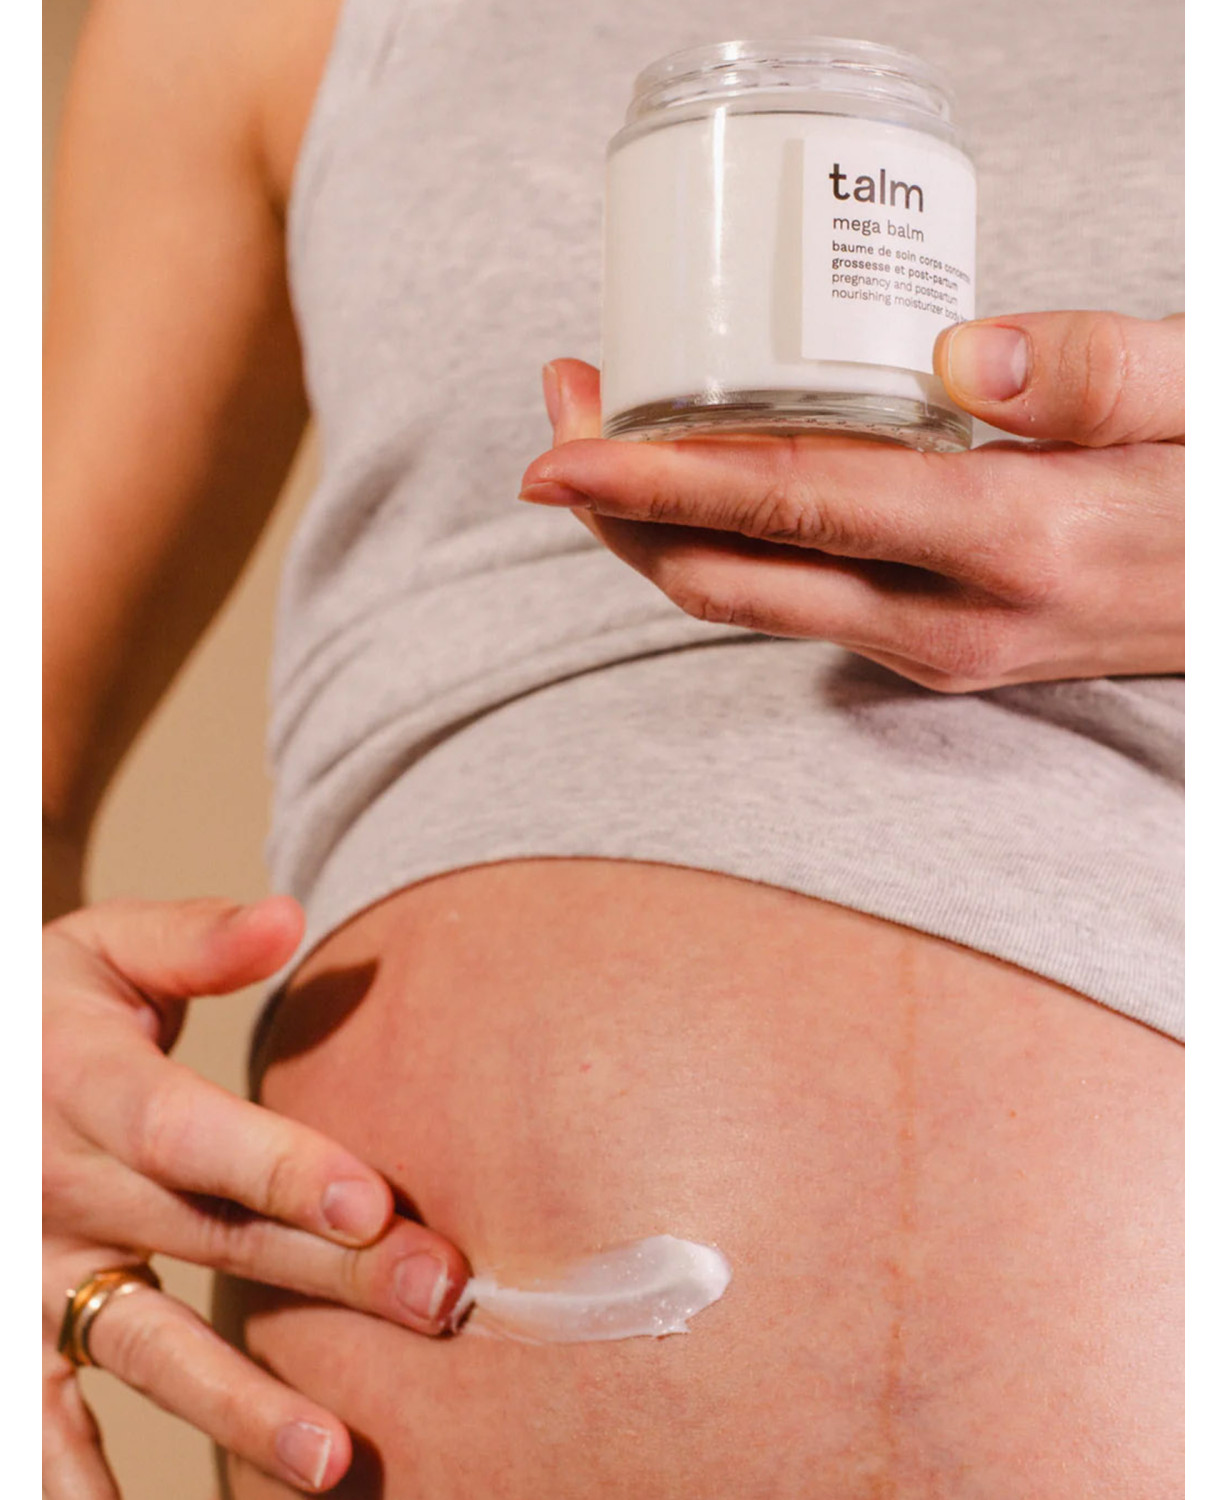 Talm organic pregnancy and postpartum care balm